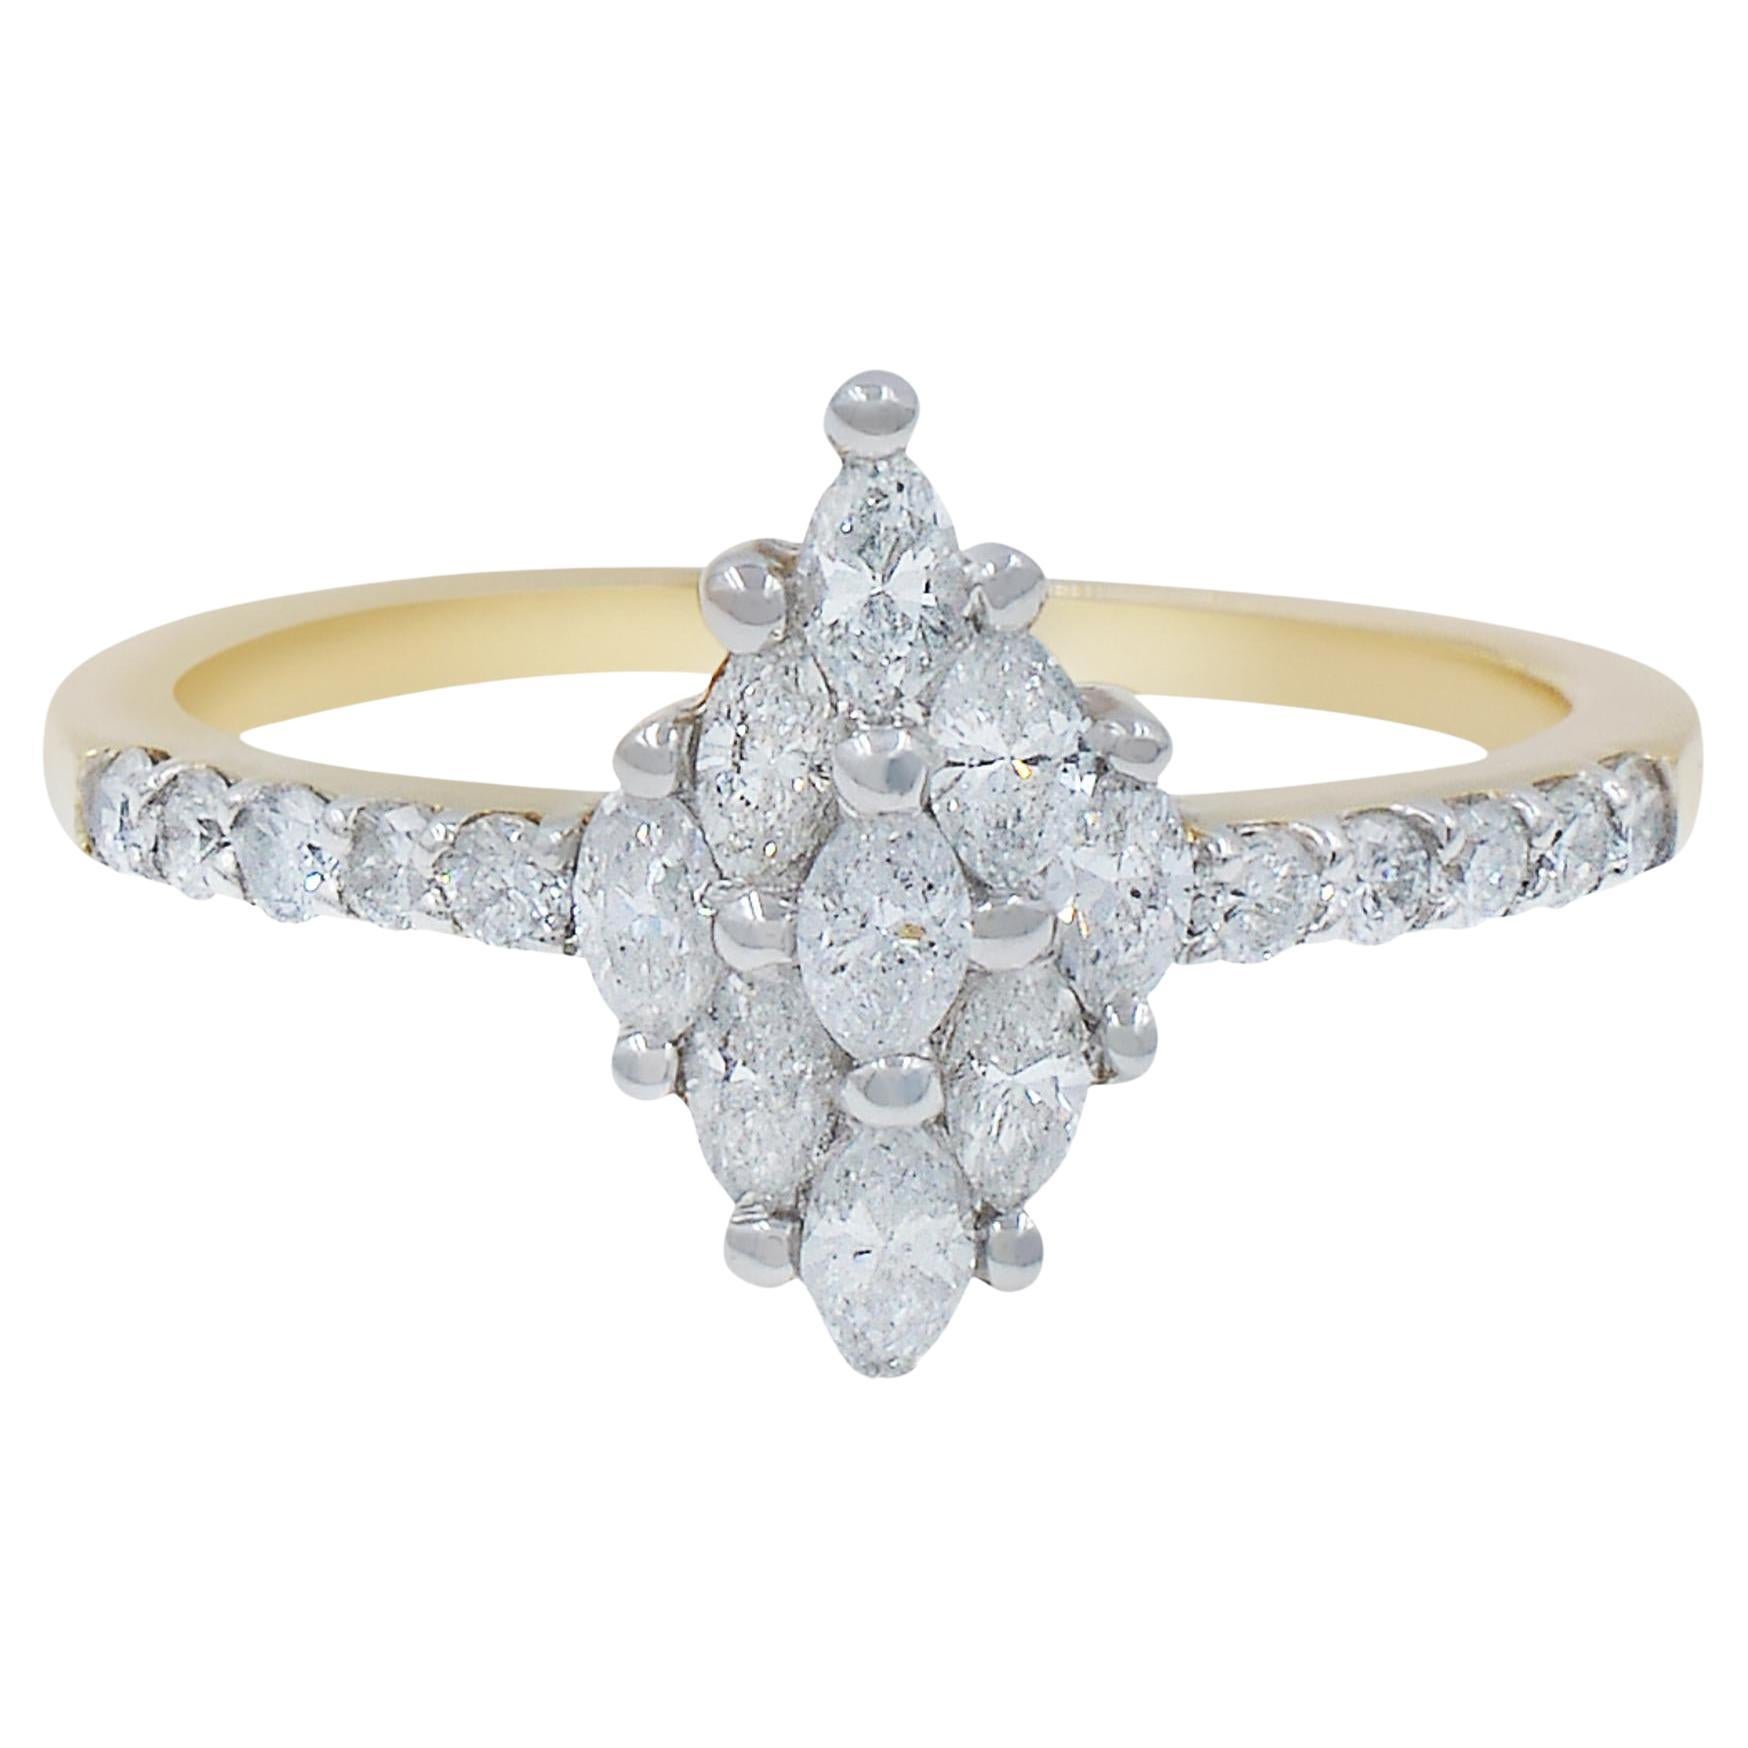 Rachel Koen Marquise Round Cut Diamond Ring 14K Yellow Gold 1.13 cttw Size 7 For Sale